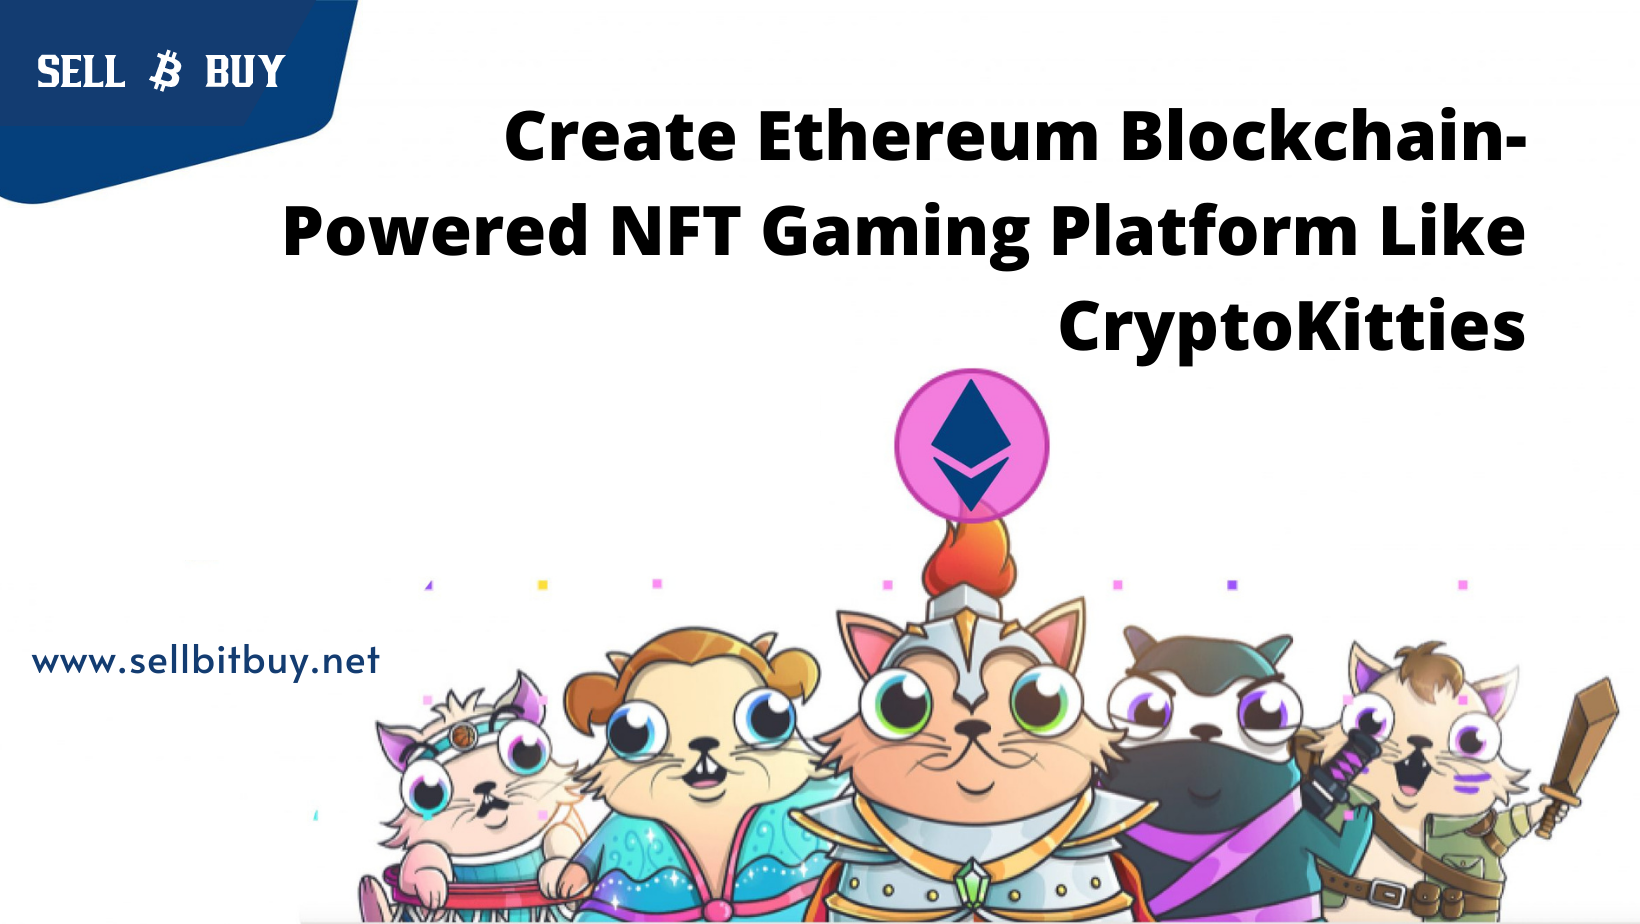 Article about Create Ethereum Blockchain-Powered NFT Gaming Platform Like CryptoKitties